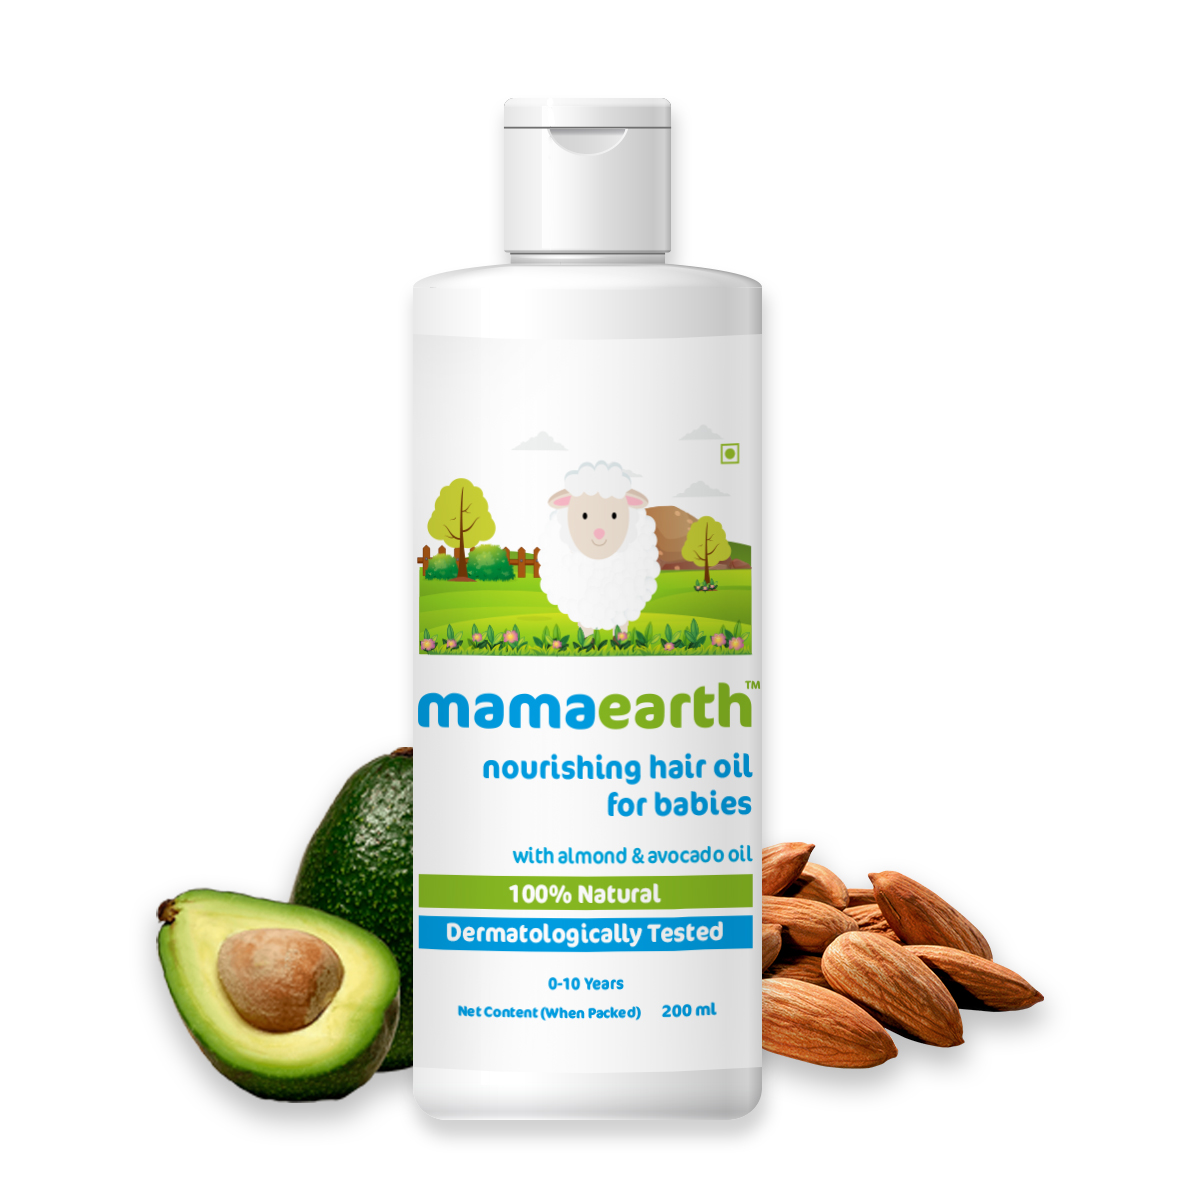 mamaearth-nourishing-hair-oil-for-babies